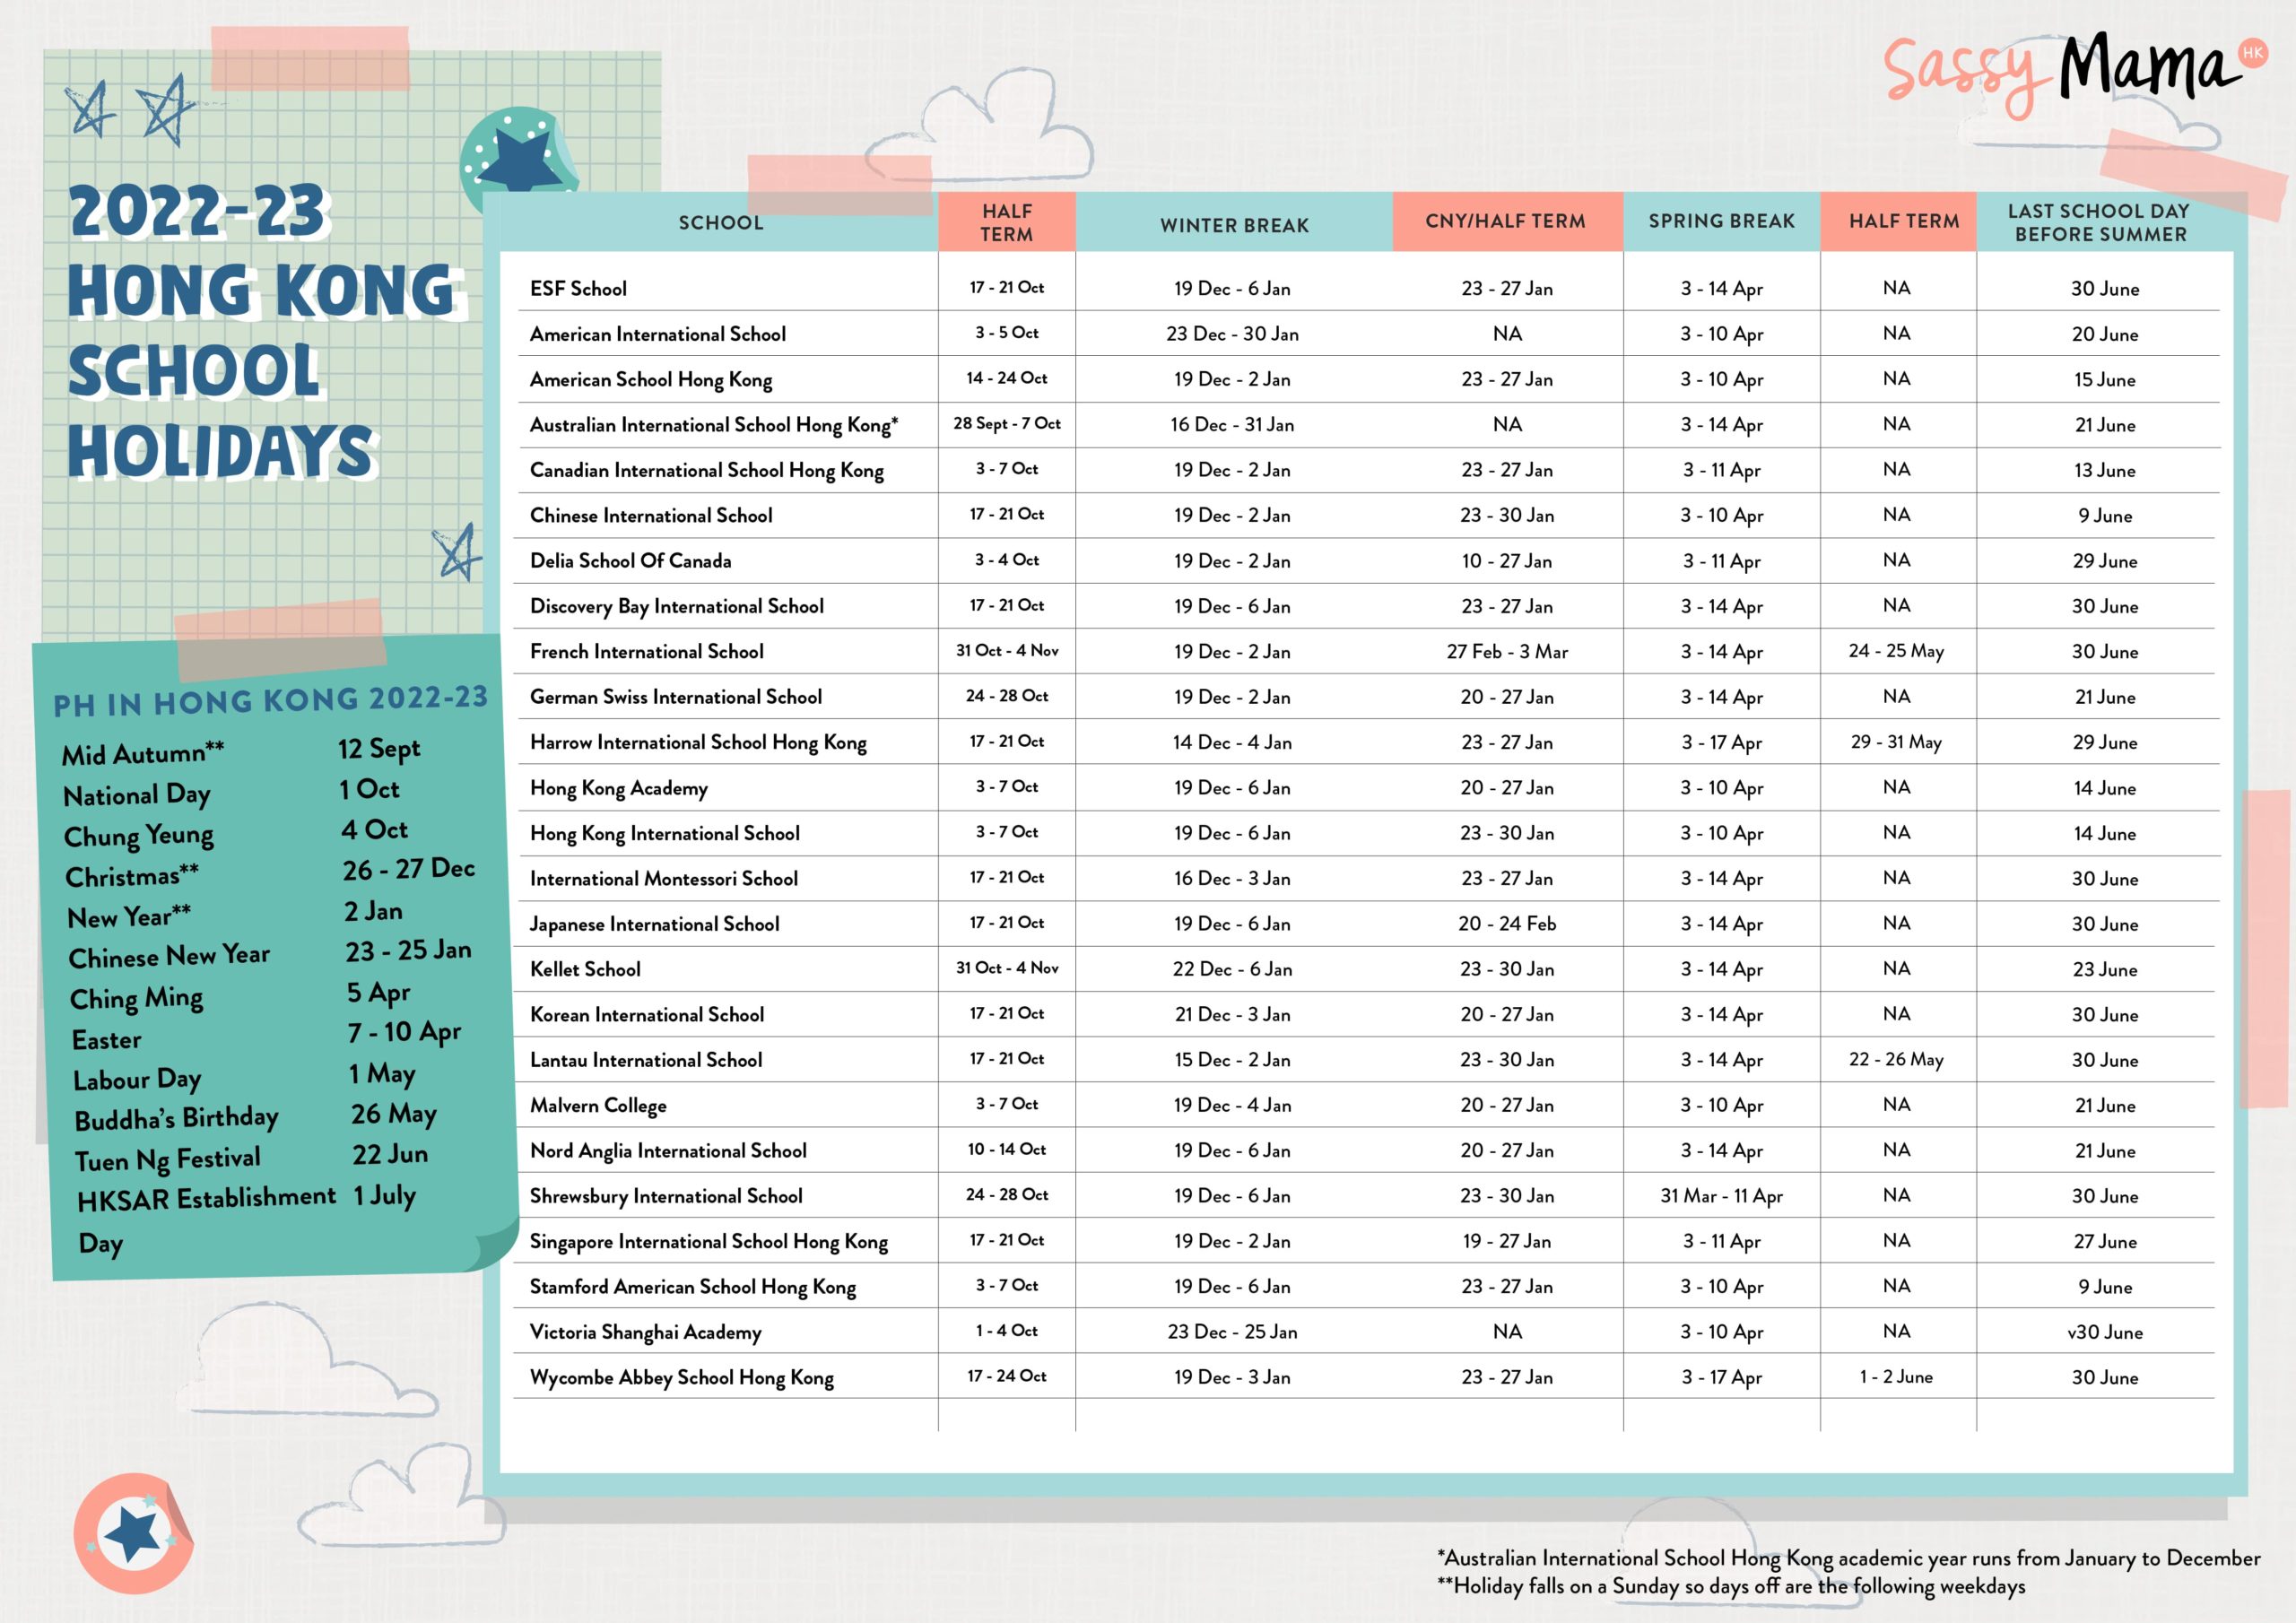 Hong Kong school calendar 2022 2023 school holiday and public holiday